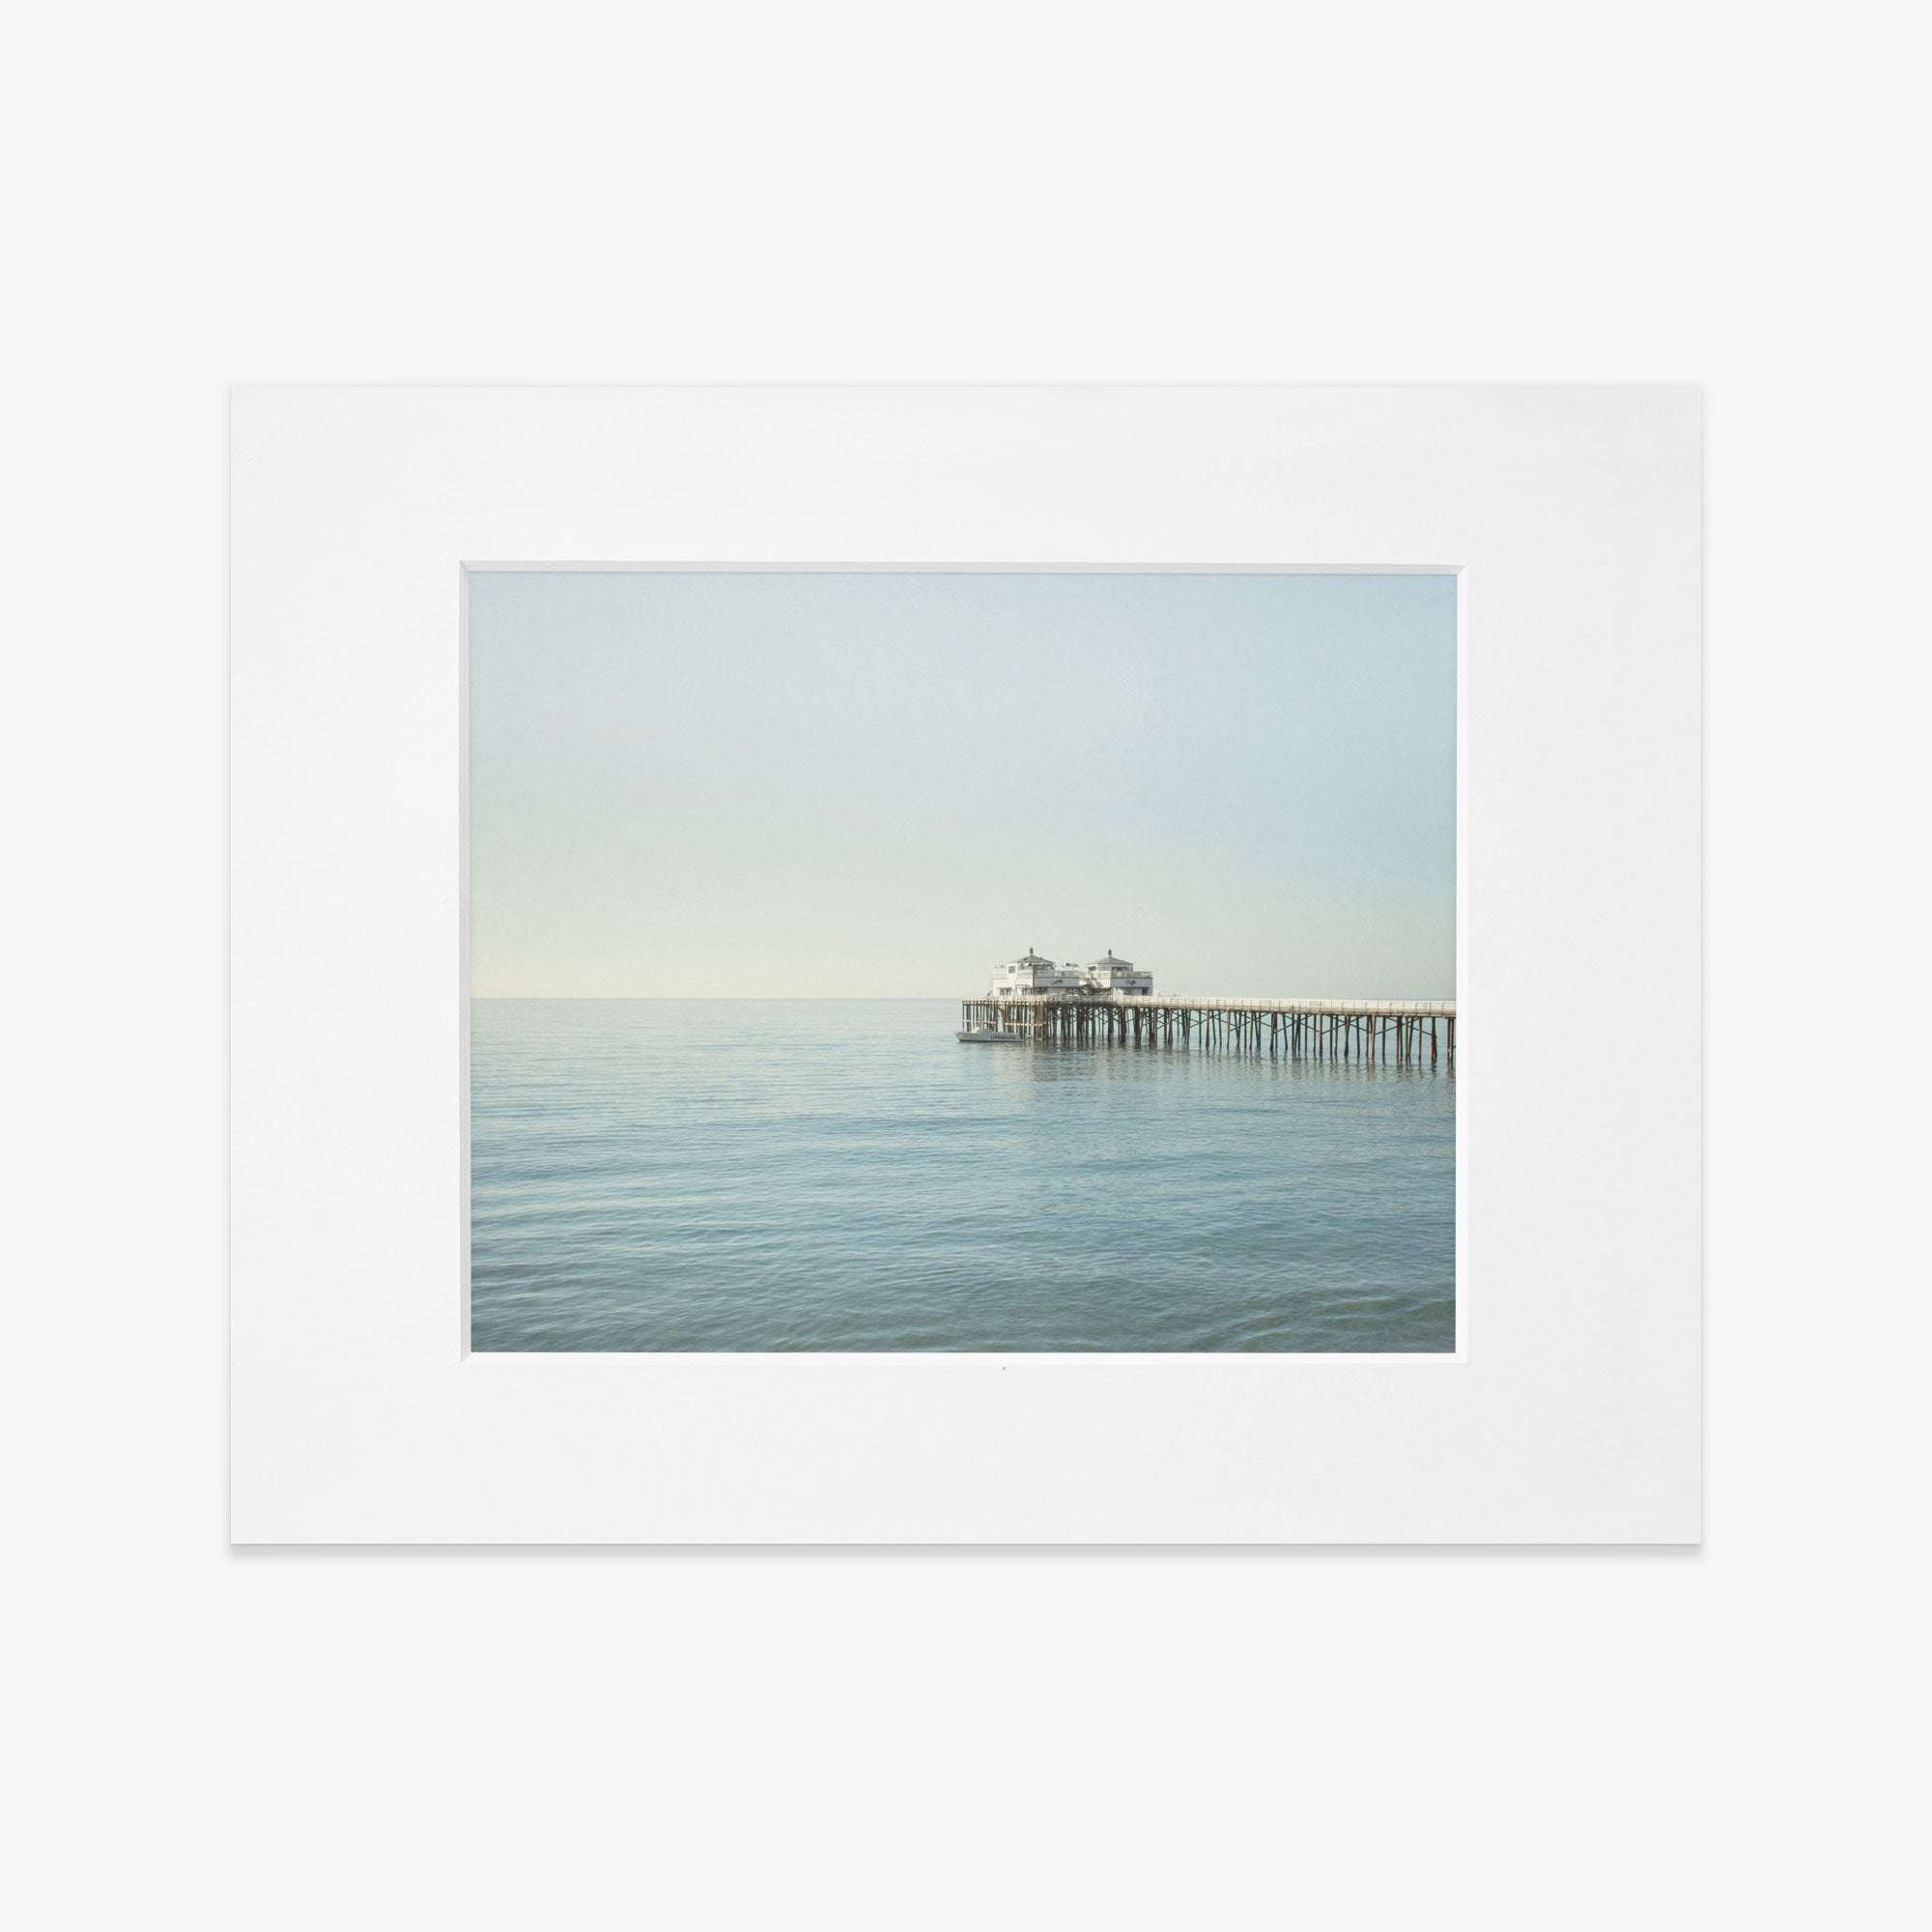 A serene image of Malibu Pier extending into a calm sea under a clear sky, framed in white, capturing a peaceful maritime scene - Offley Green&#39;s &#39;All Calm in Malibu&#39; coastal print.